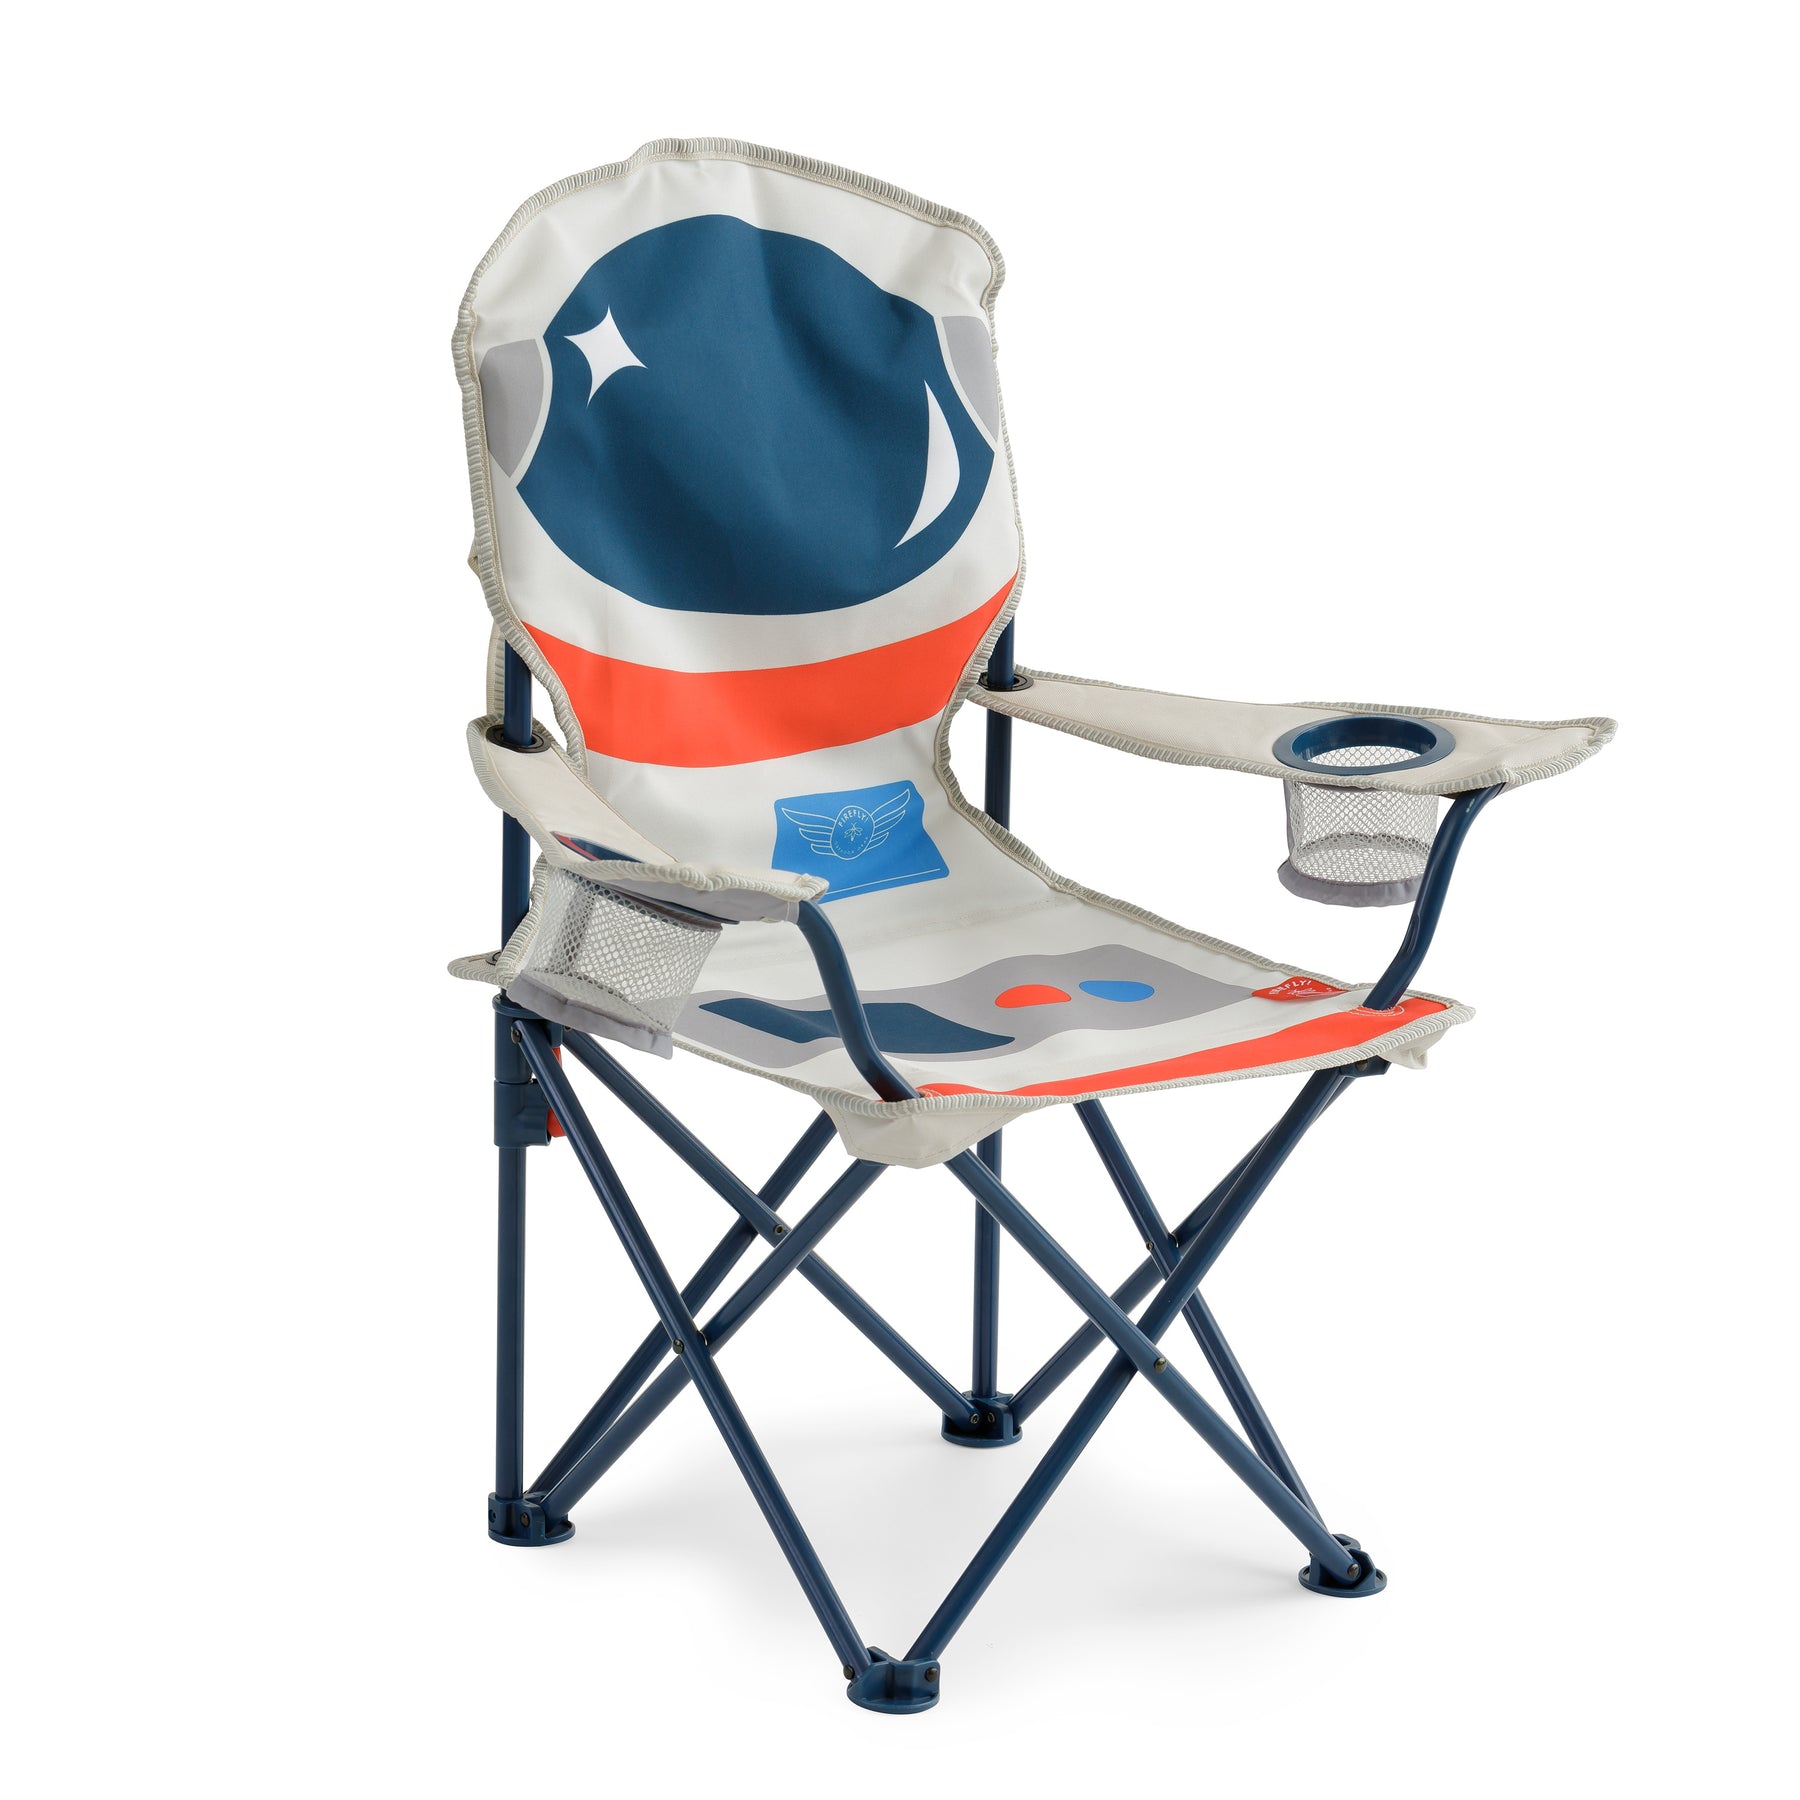 Jett the Astronaut Kids' Camping Chair